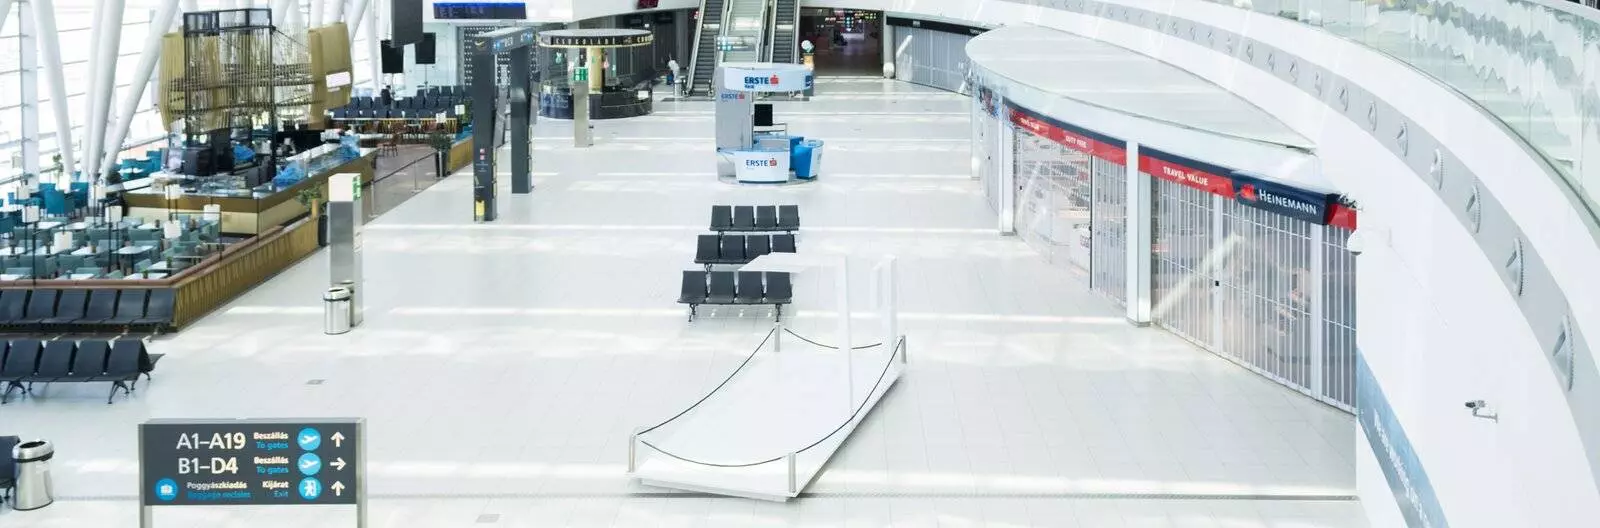 Аэропорт будапешта его схема онлайн табло, а также информация про сервис и регистрацию в аэропорту